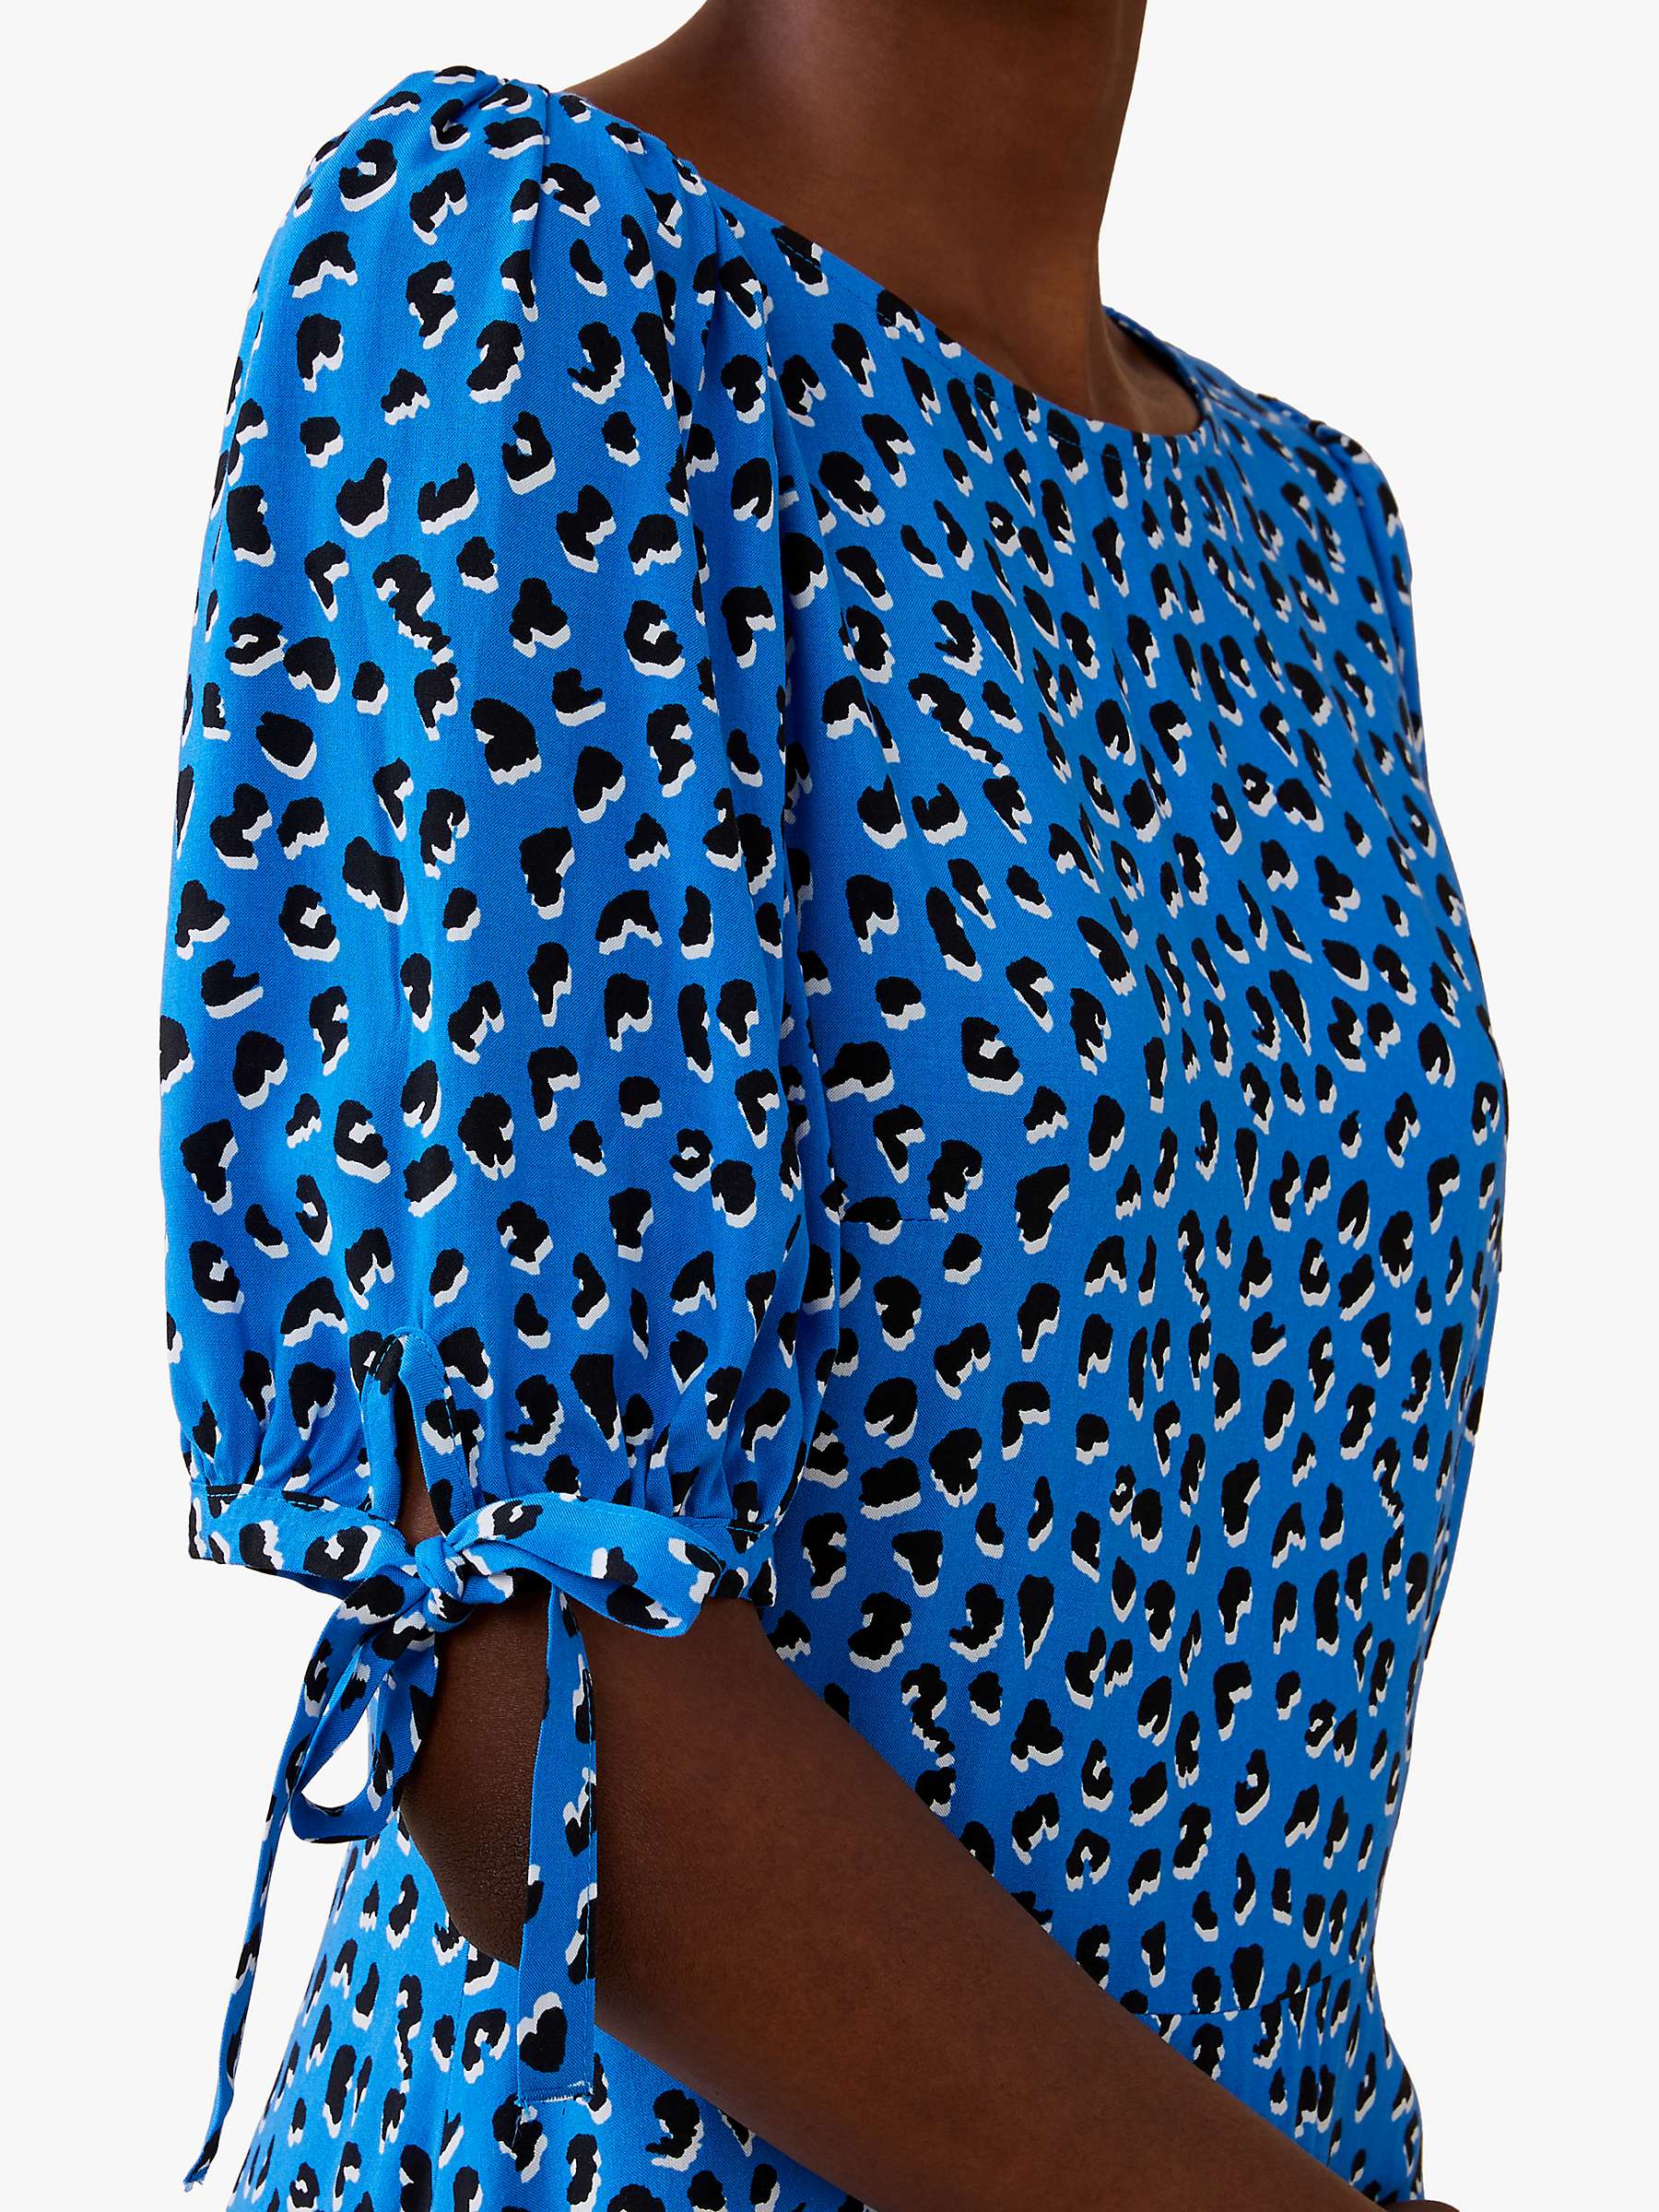 Buy Finery Ruby Leopard Print Midi Dress, Bright Blue Online at johnlewis.com